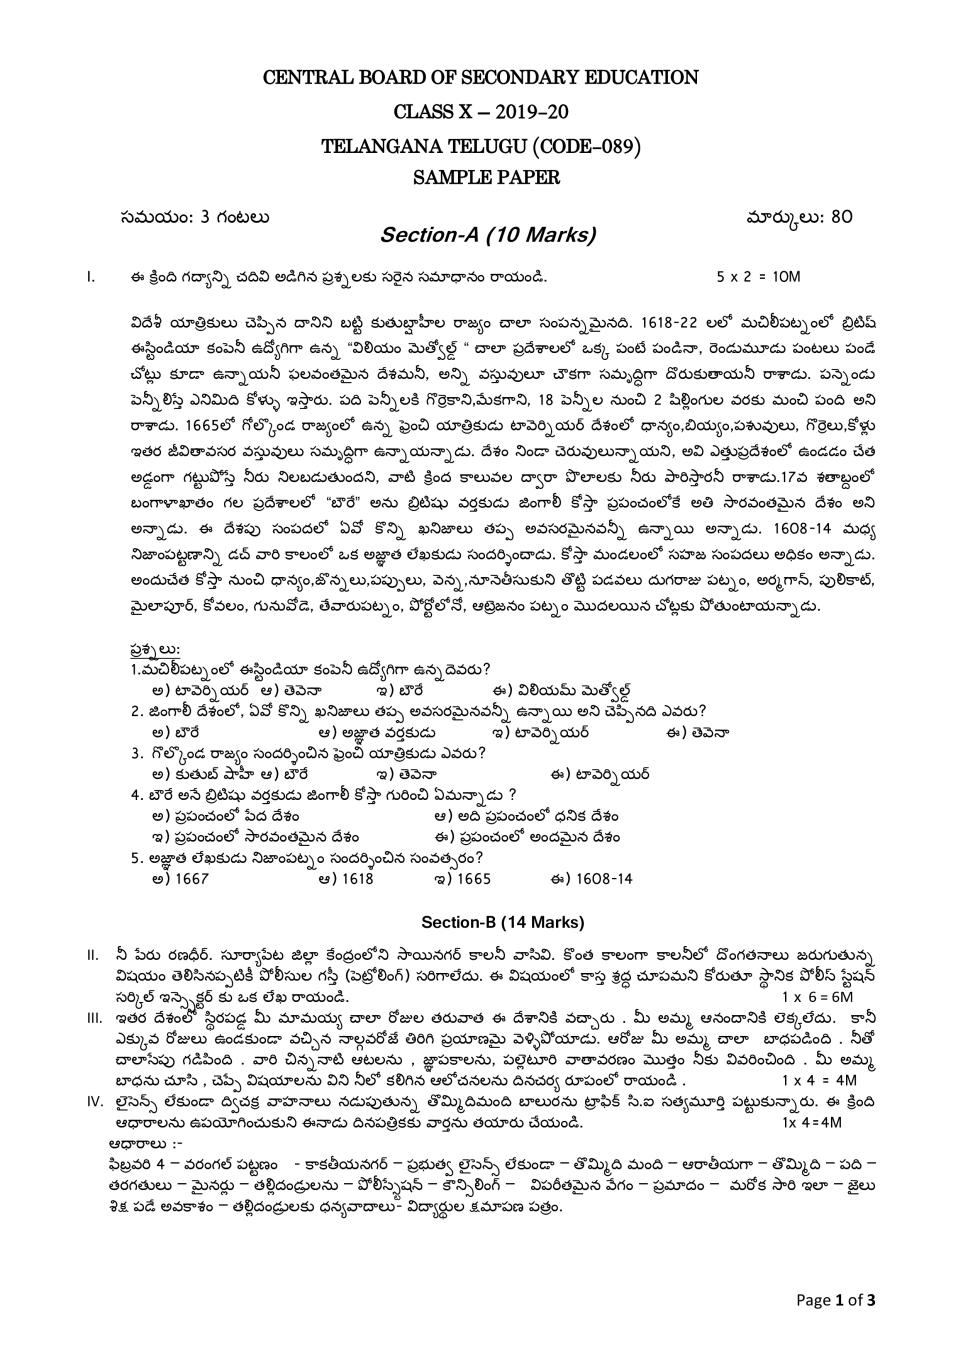 CBSE Class 10 Sample Paper 2020 for Telugu Telangana - Page 1